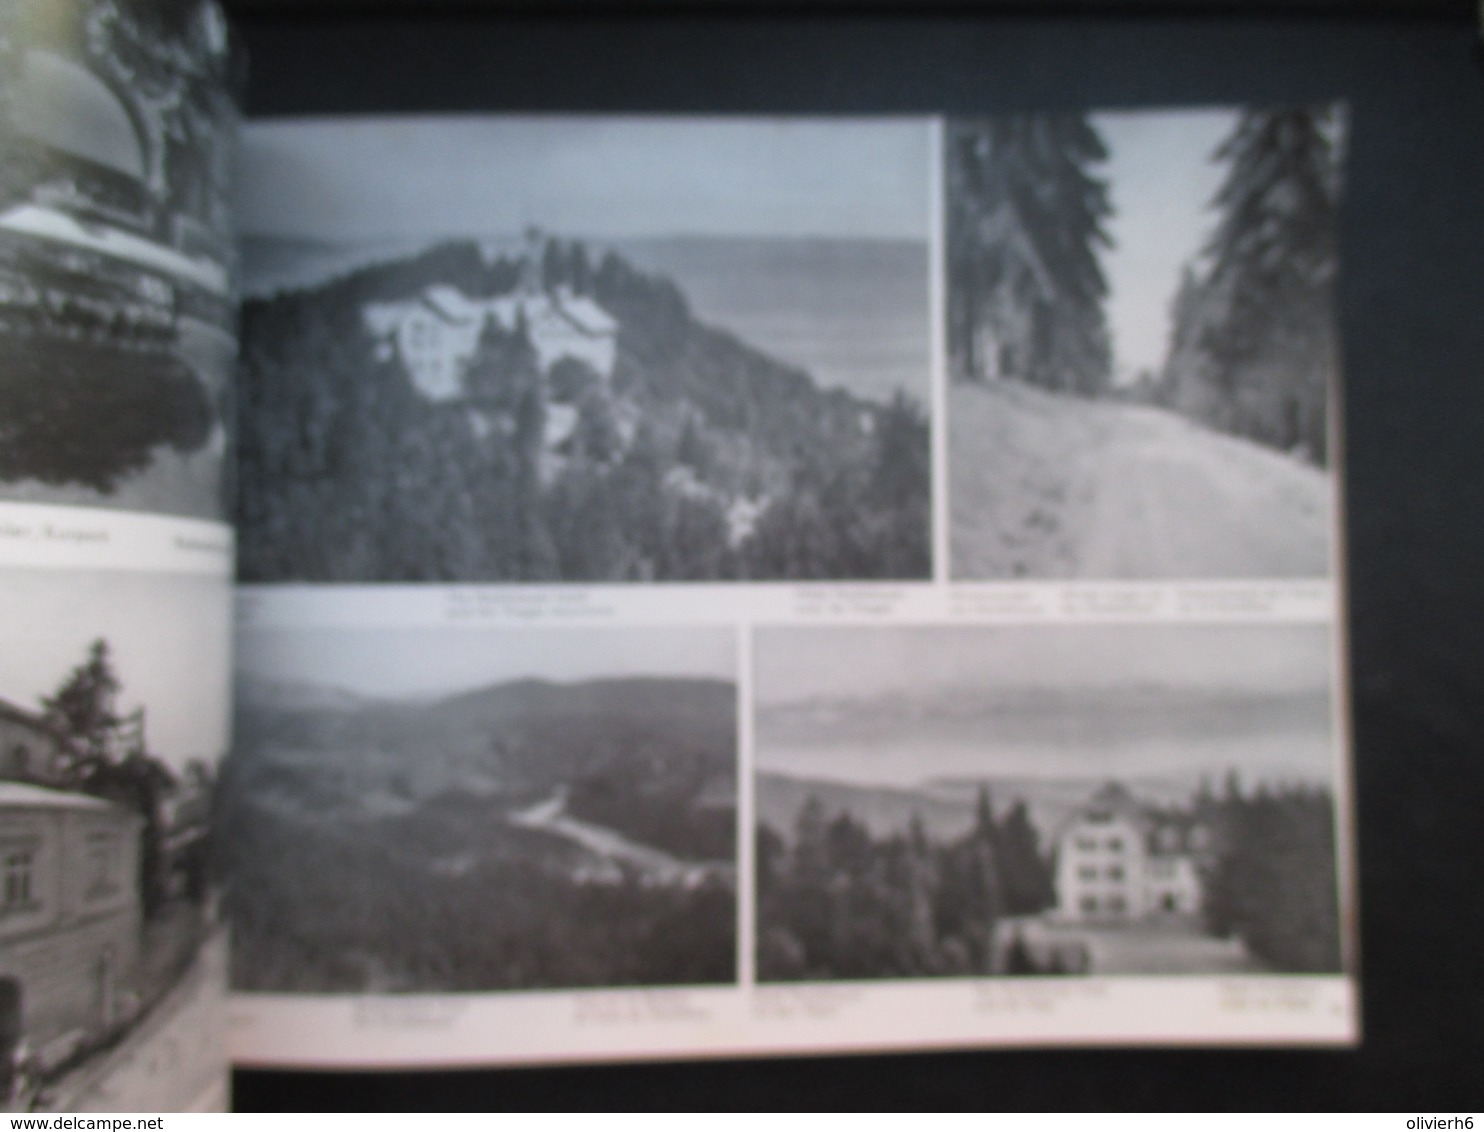 DéPLIANT TOURISTIQUE (M1903) ALLEMAGNE (2 vues) O' SCHWARZWALD Wie bist du so schön HEFT 1 années 60 Black Forest